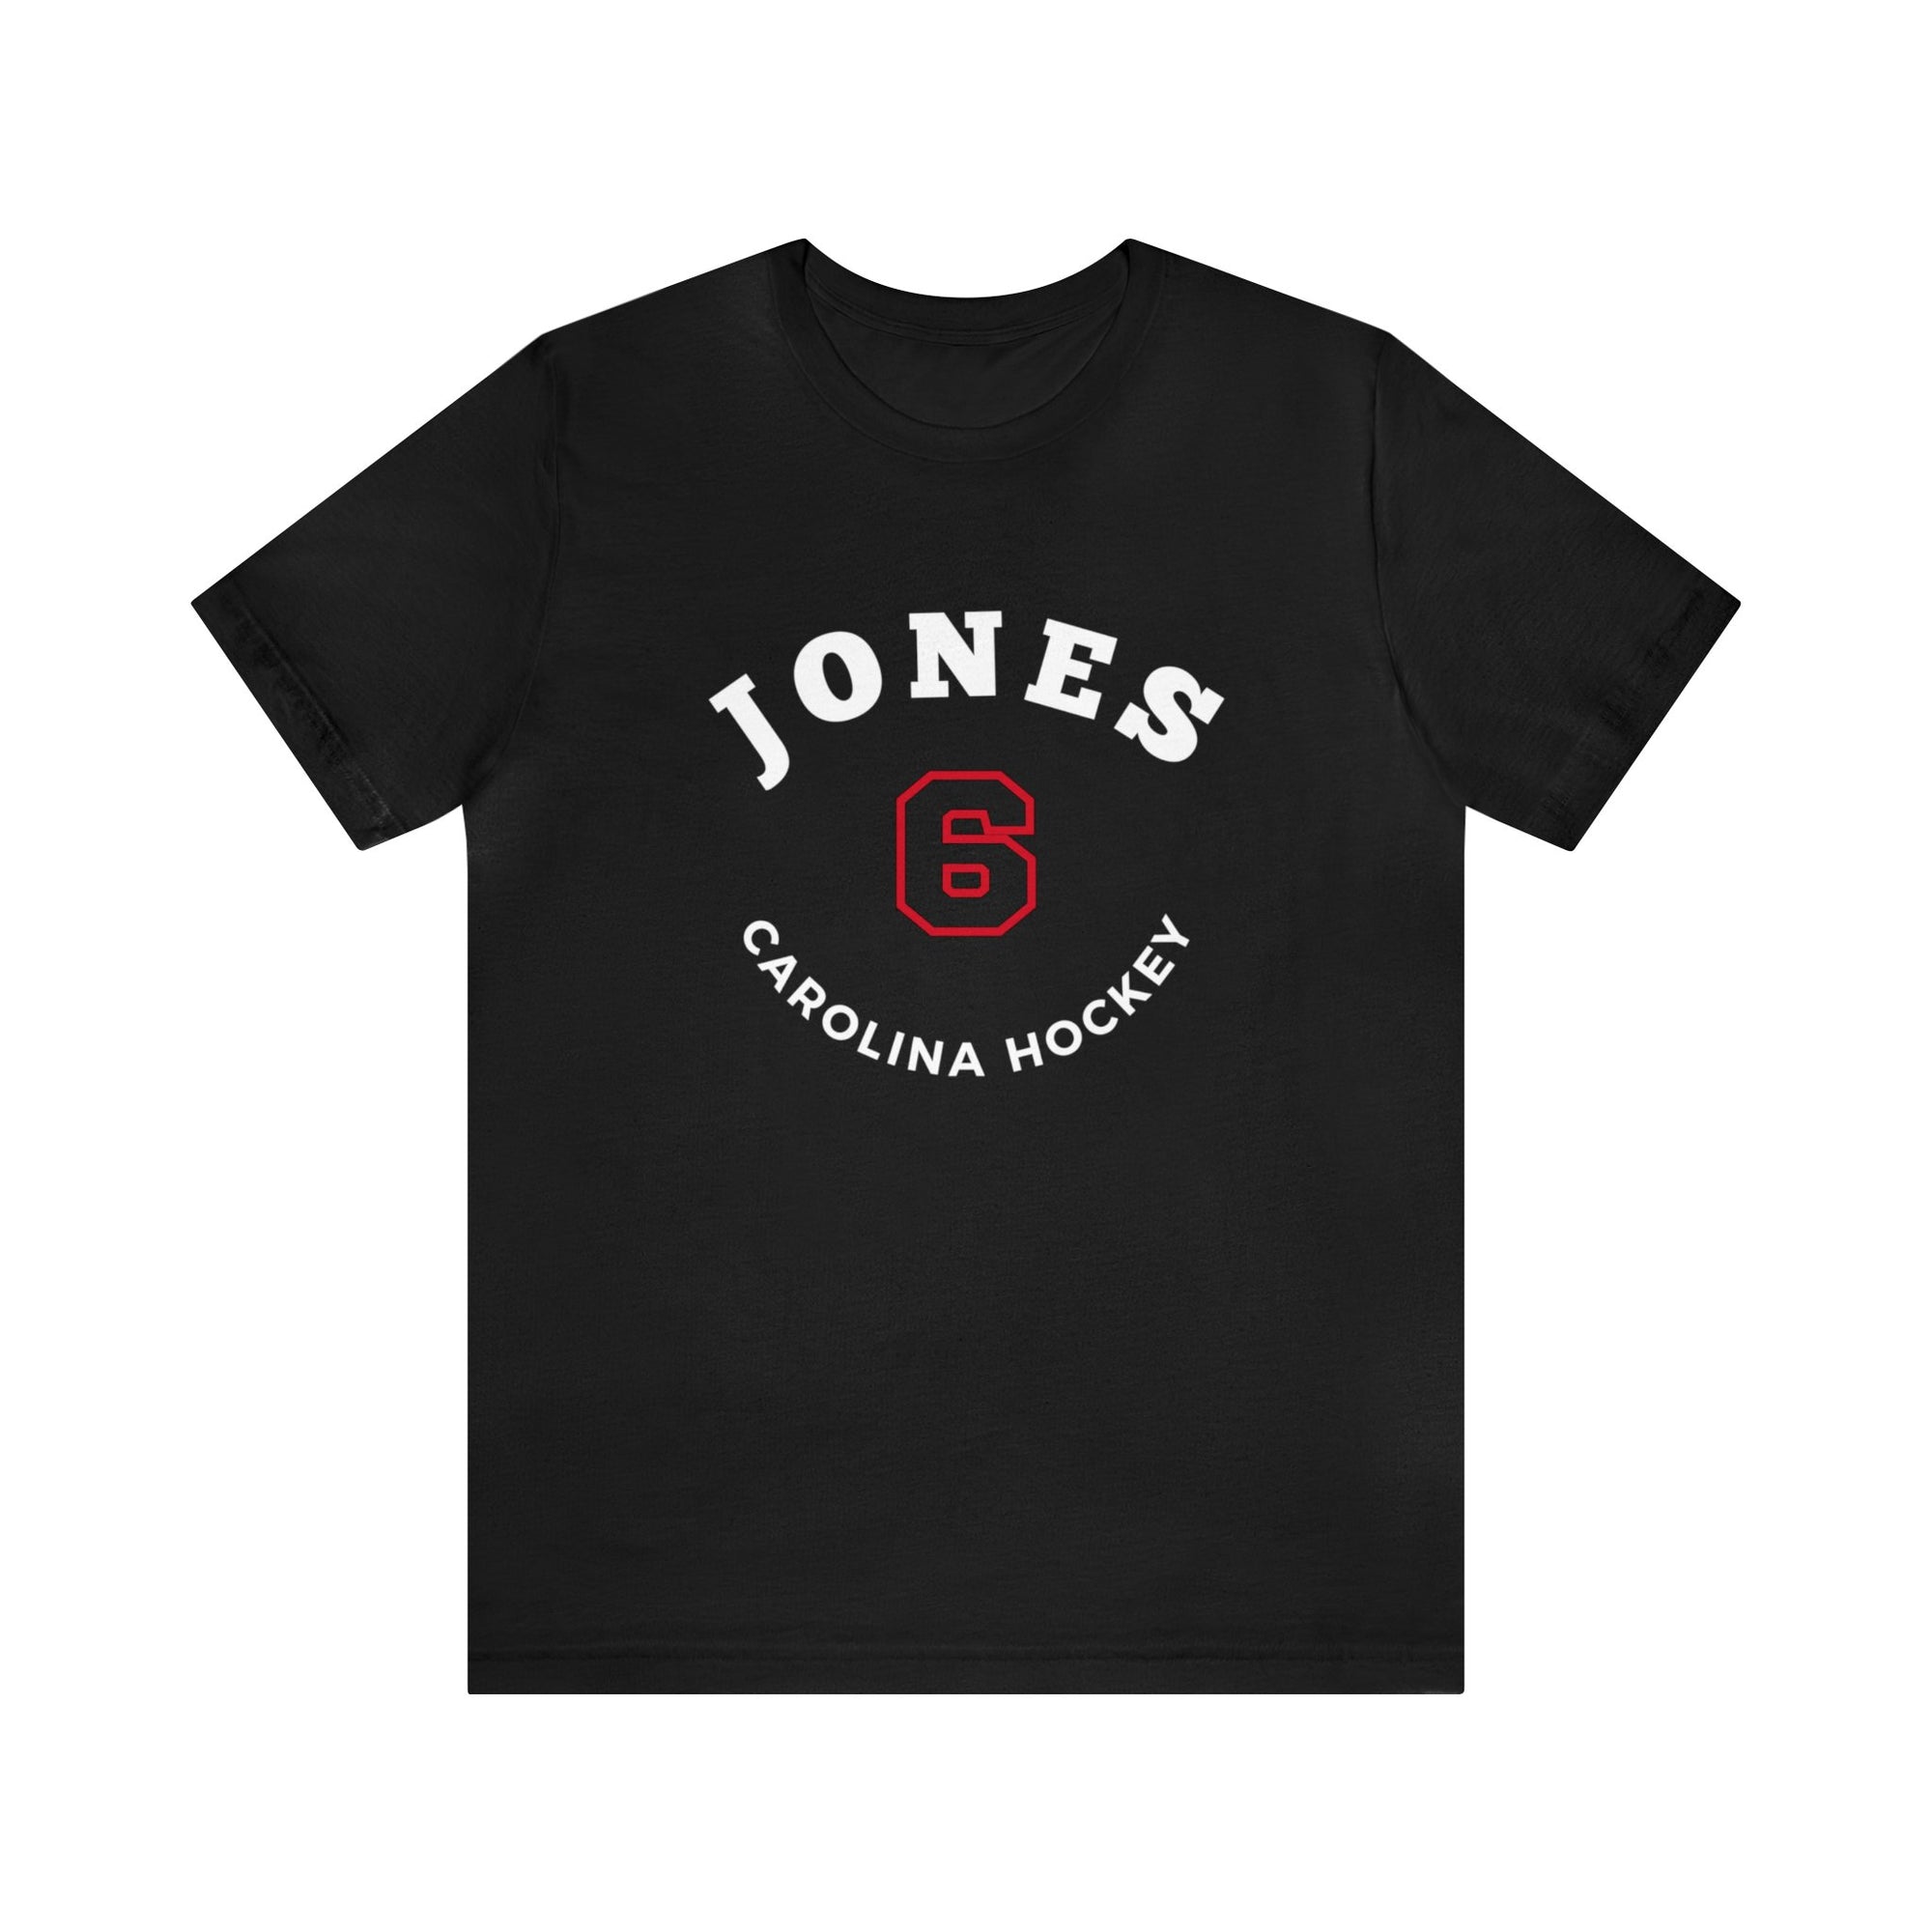 Jones 6 Carolina Hockey Number Arch Design Unisex T-Shirt